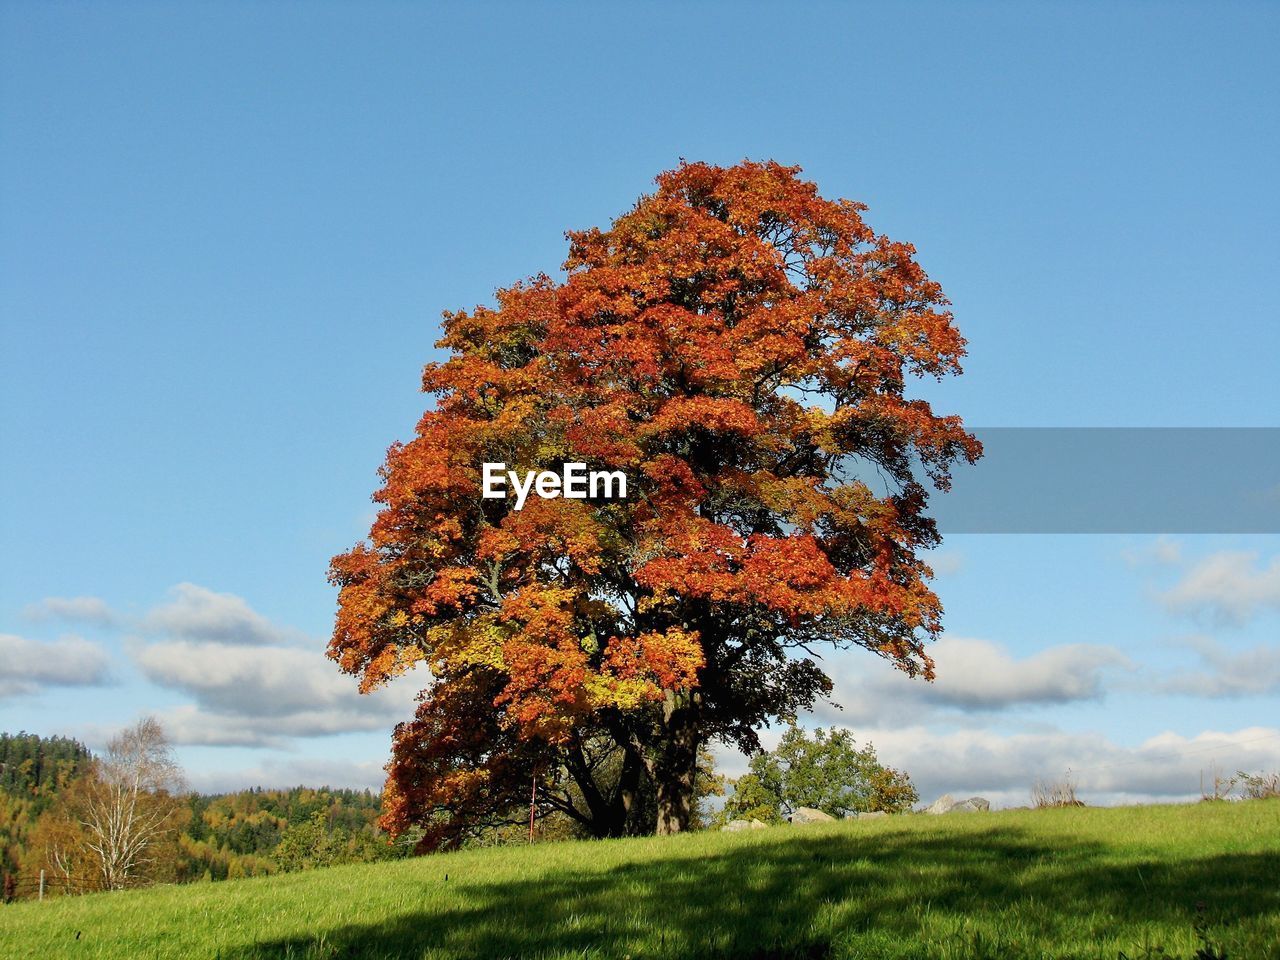 Autumn tree on grass at park against sky